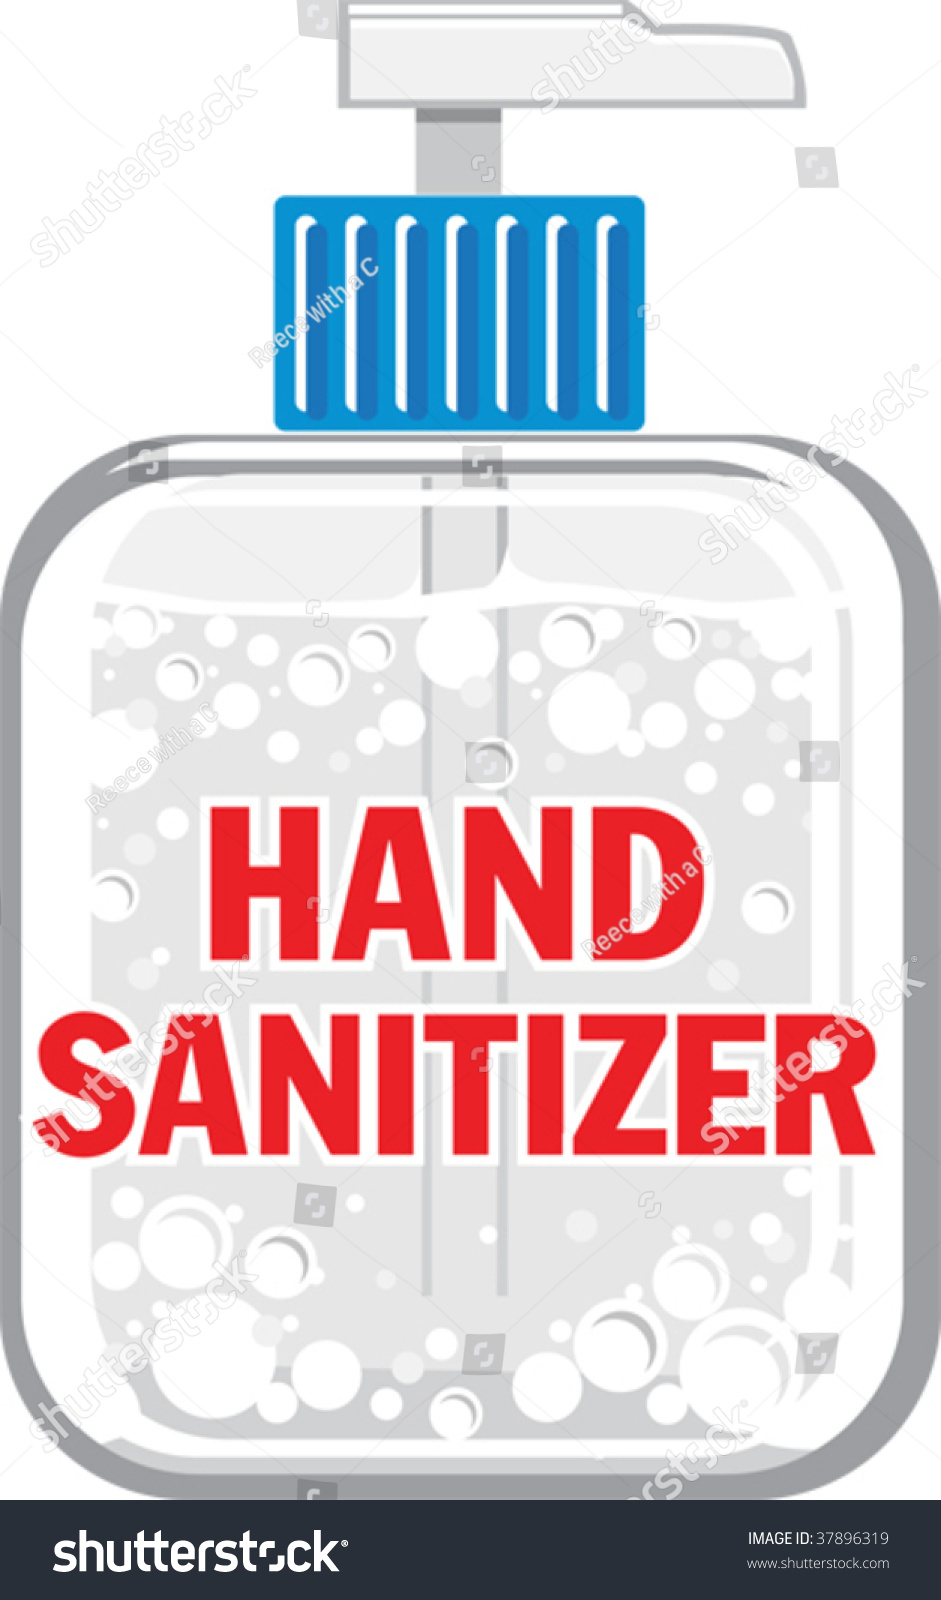 hand sanitizer clipart